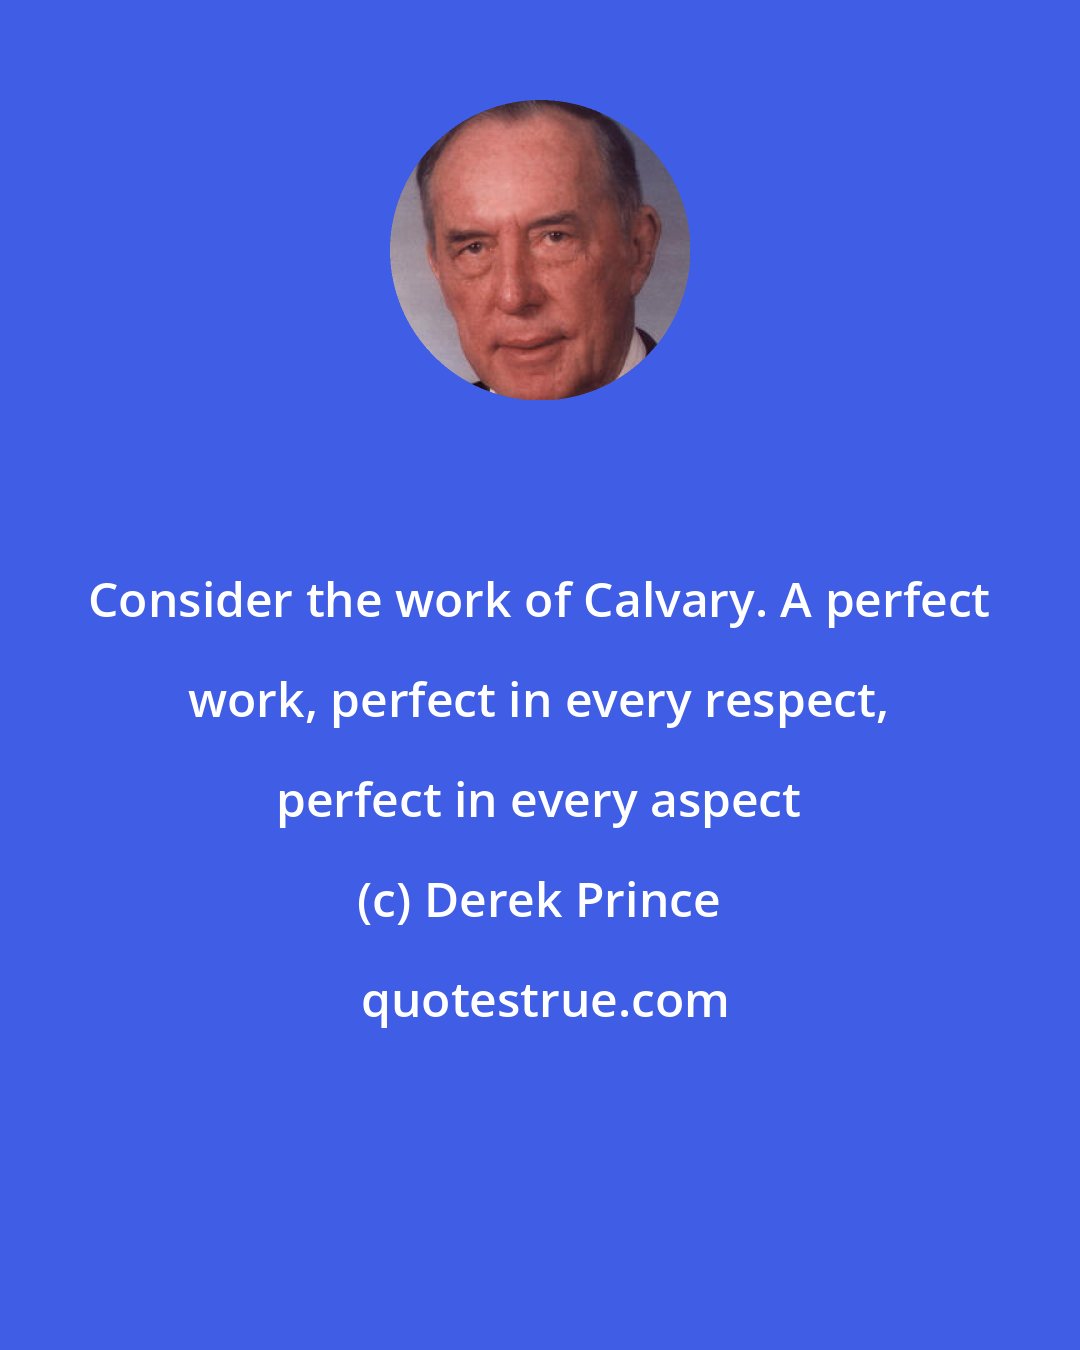 Derek Prince: Consider the work of Calvary. A perfect work, perfect in every respect, perfect in every aspect